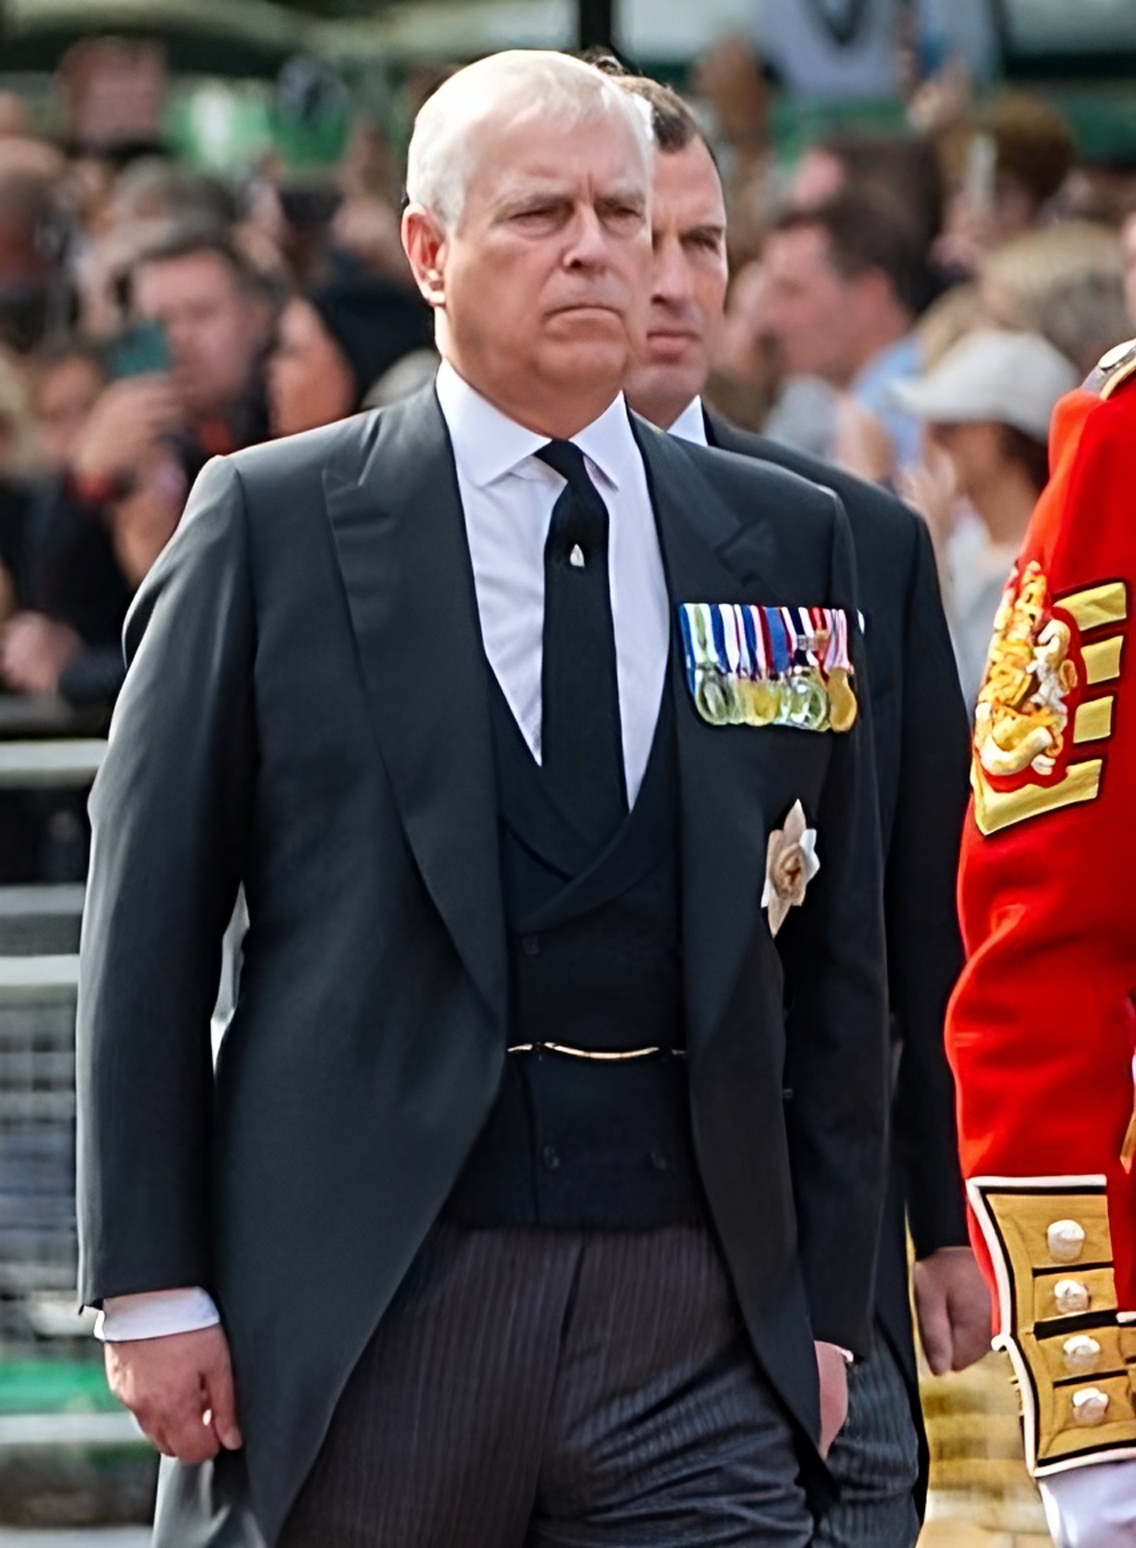 Prince Andrew, Duke of York pic